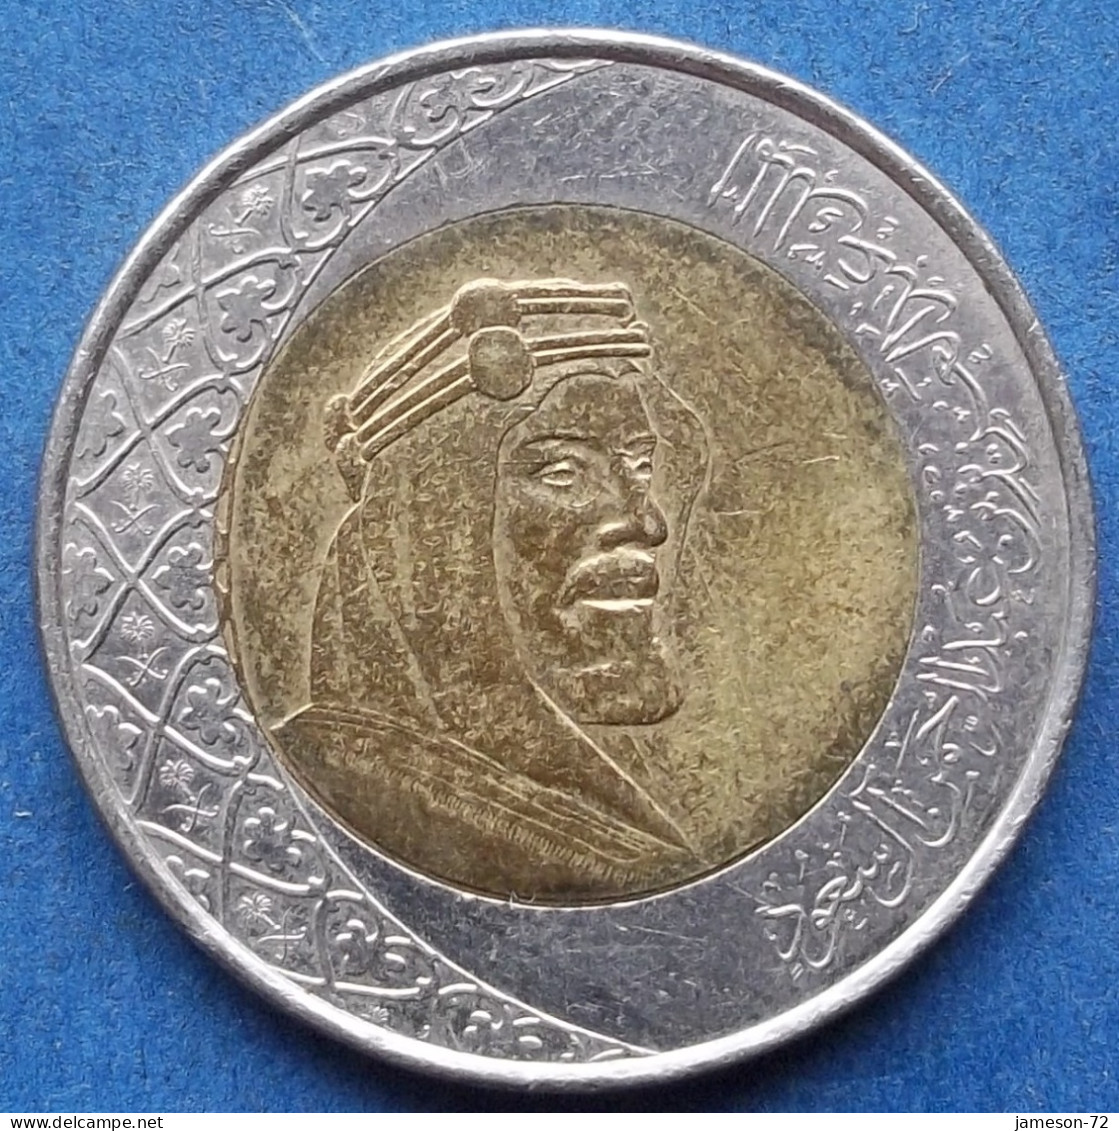 SAUDI ARABIA - 2 Riyals AH1438 / 2016AD KM# 79 Fahad Bin Abd Al-Aziz (1982) - Edelweiss Coins - Saudi Arabia